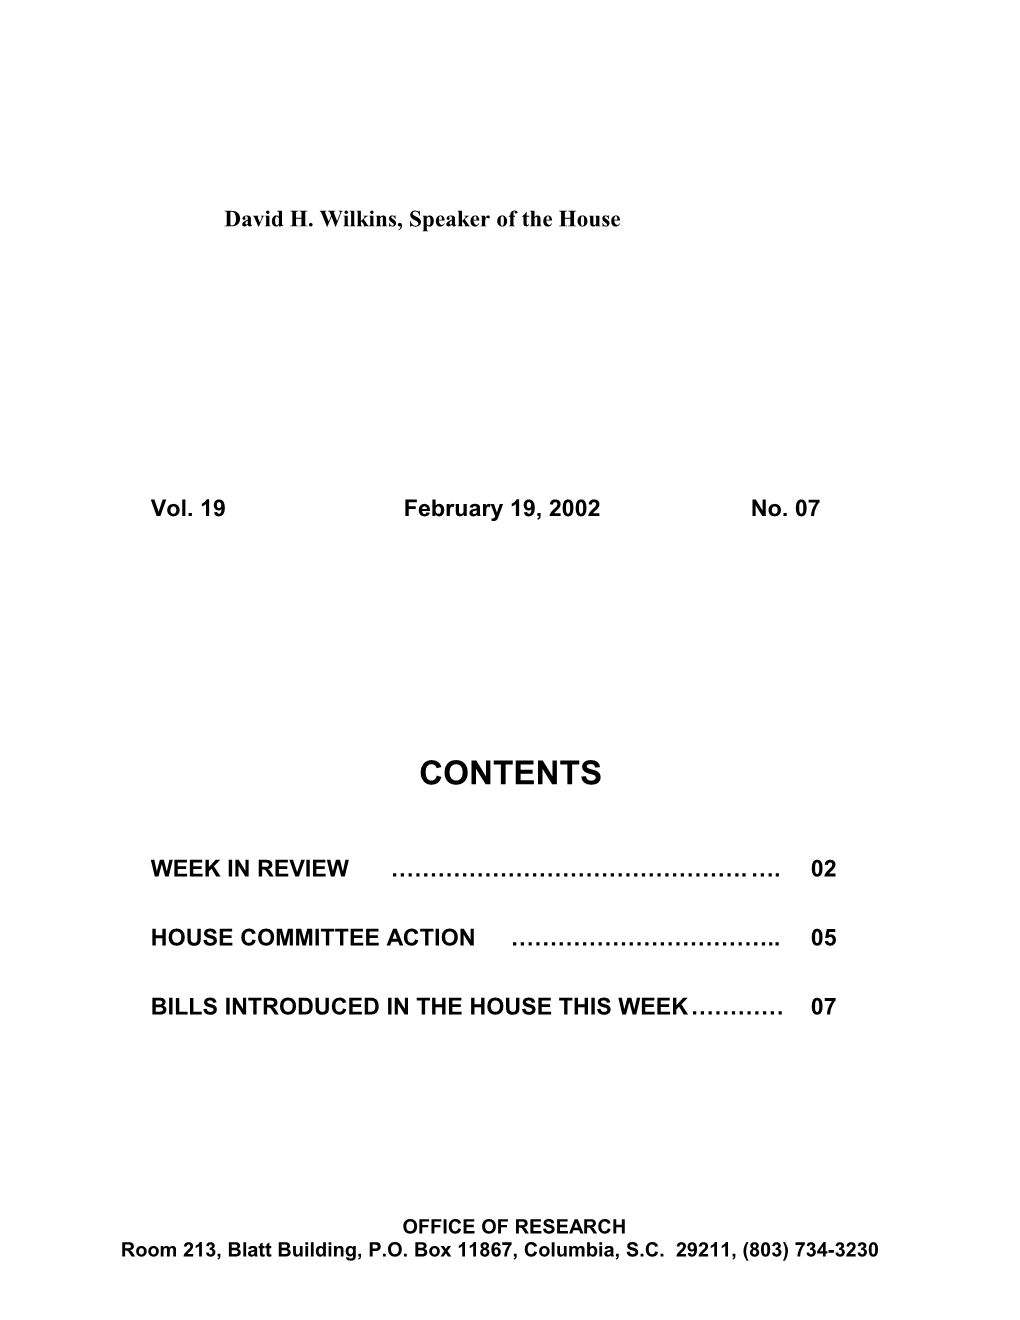 Legislative Update - Vol. 19 No. 07 February 19, 2002 - South Carolina Legislature Online